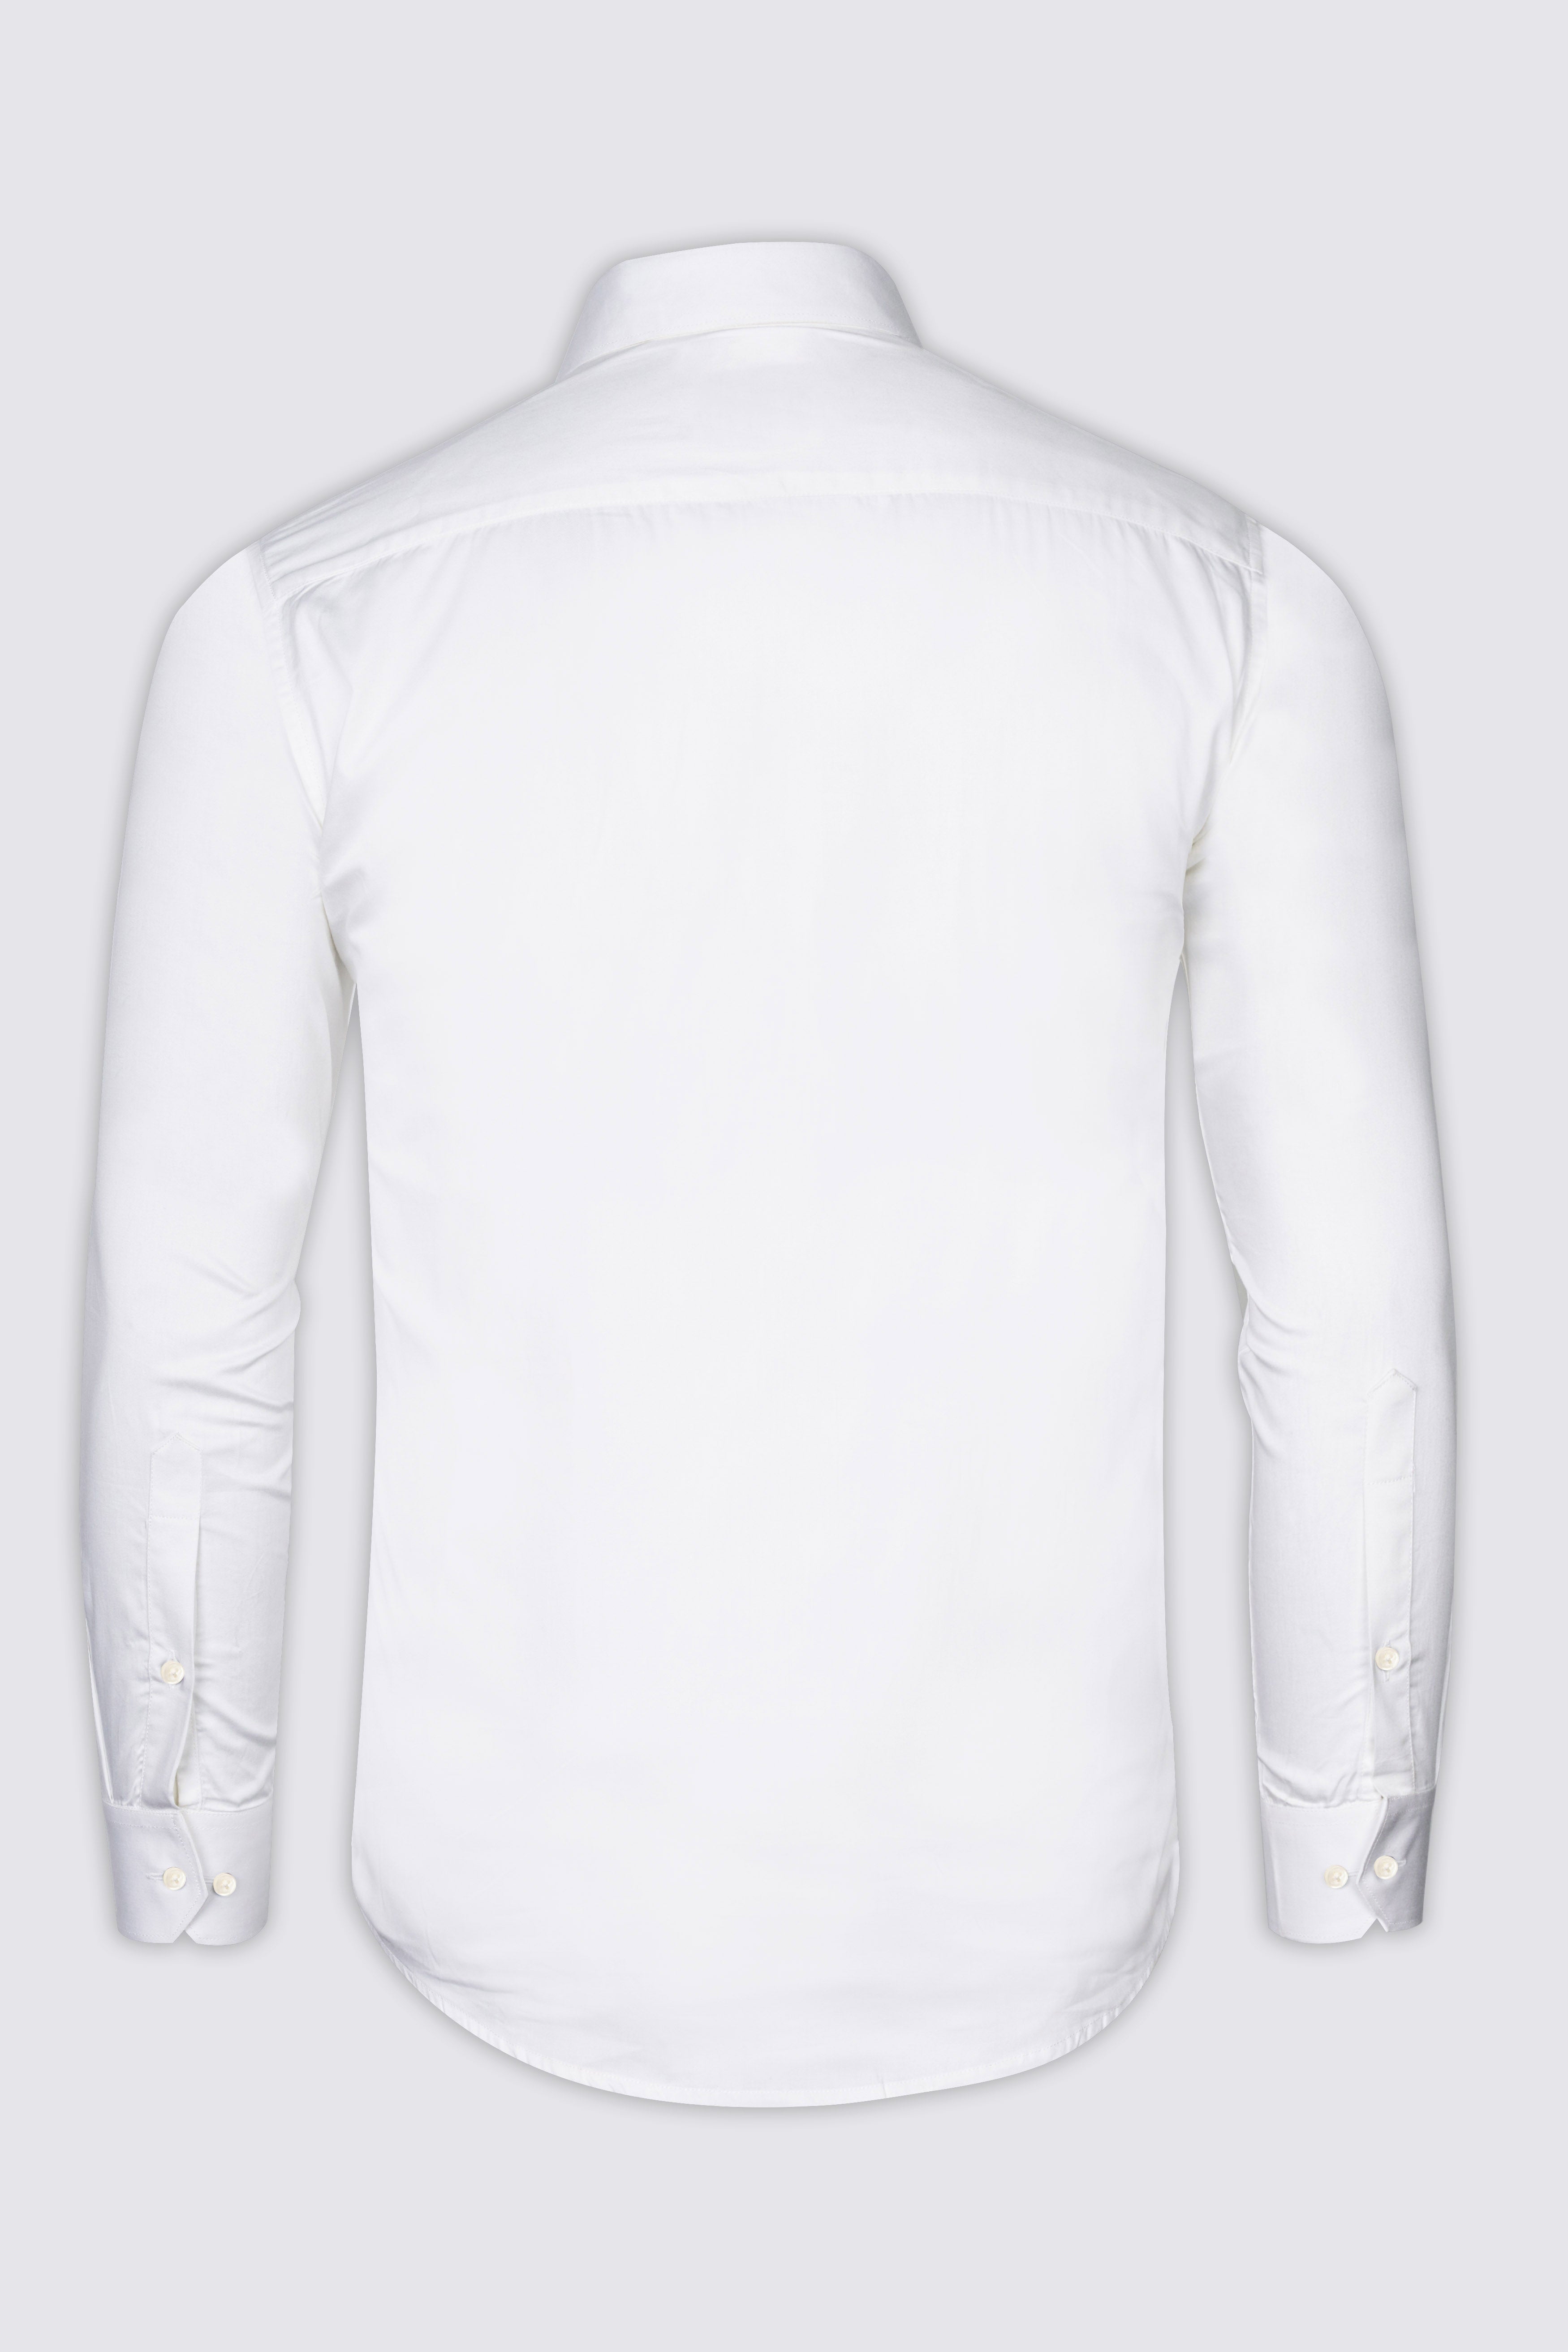 Bright White Funky Printed Premium Cotton Designer Shirt